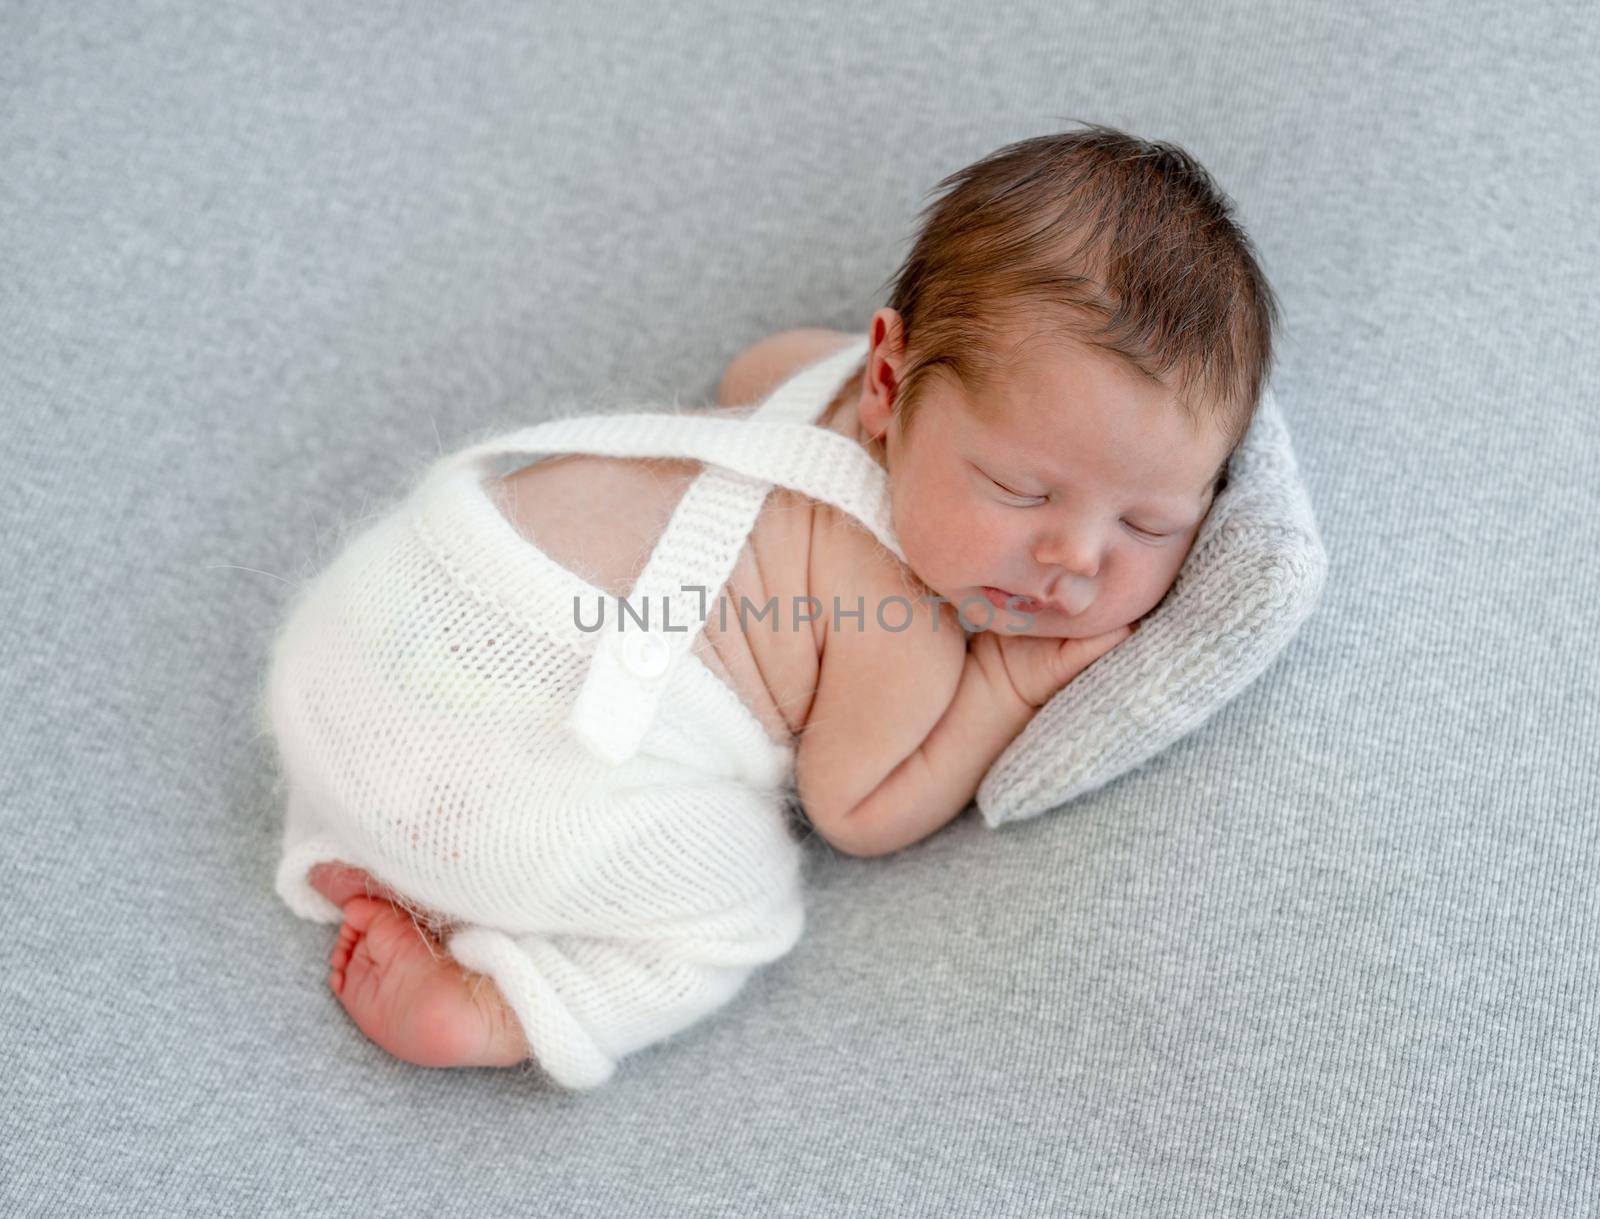 Newborn baby boy portrait by tan4ikk1